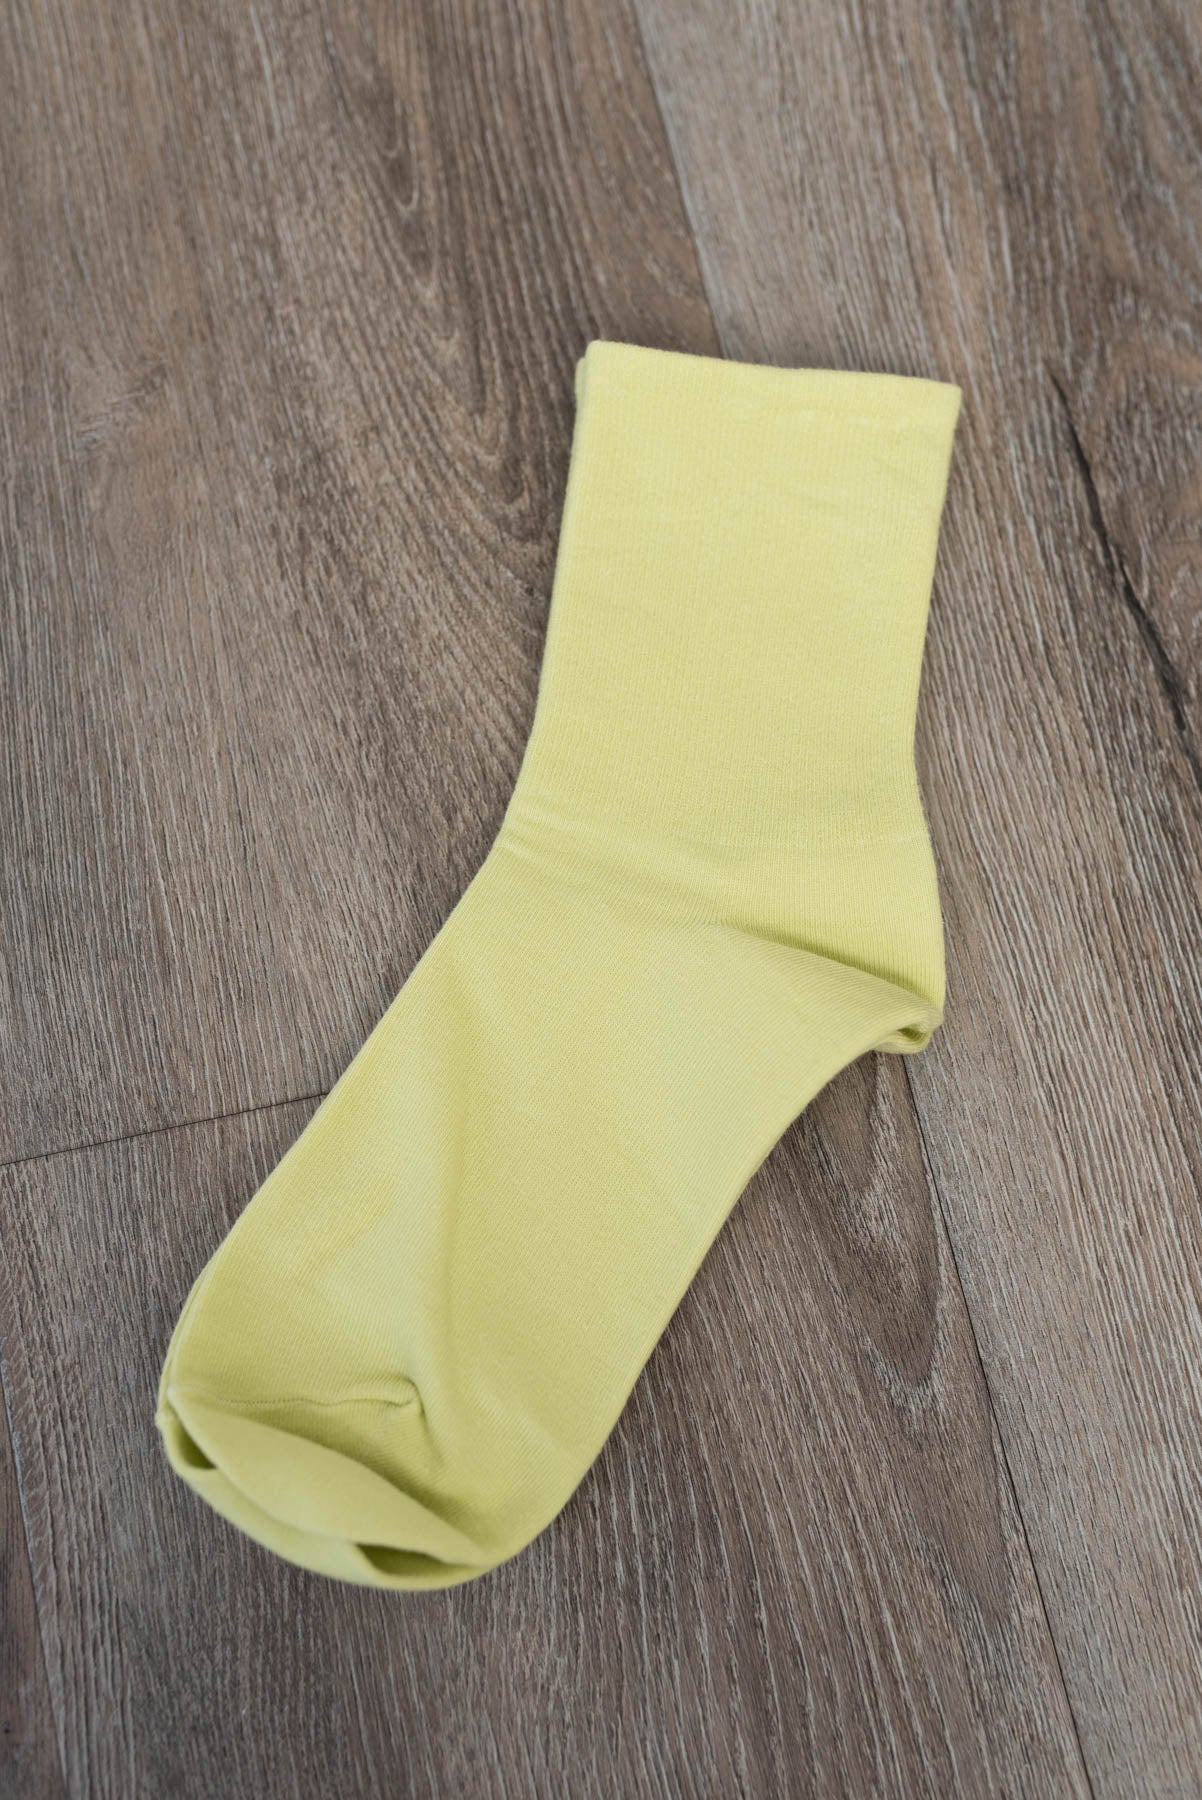 Yellow 3 pack socks